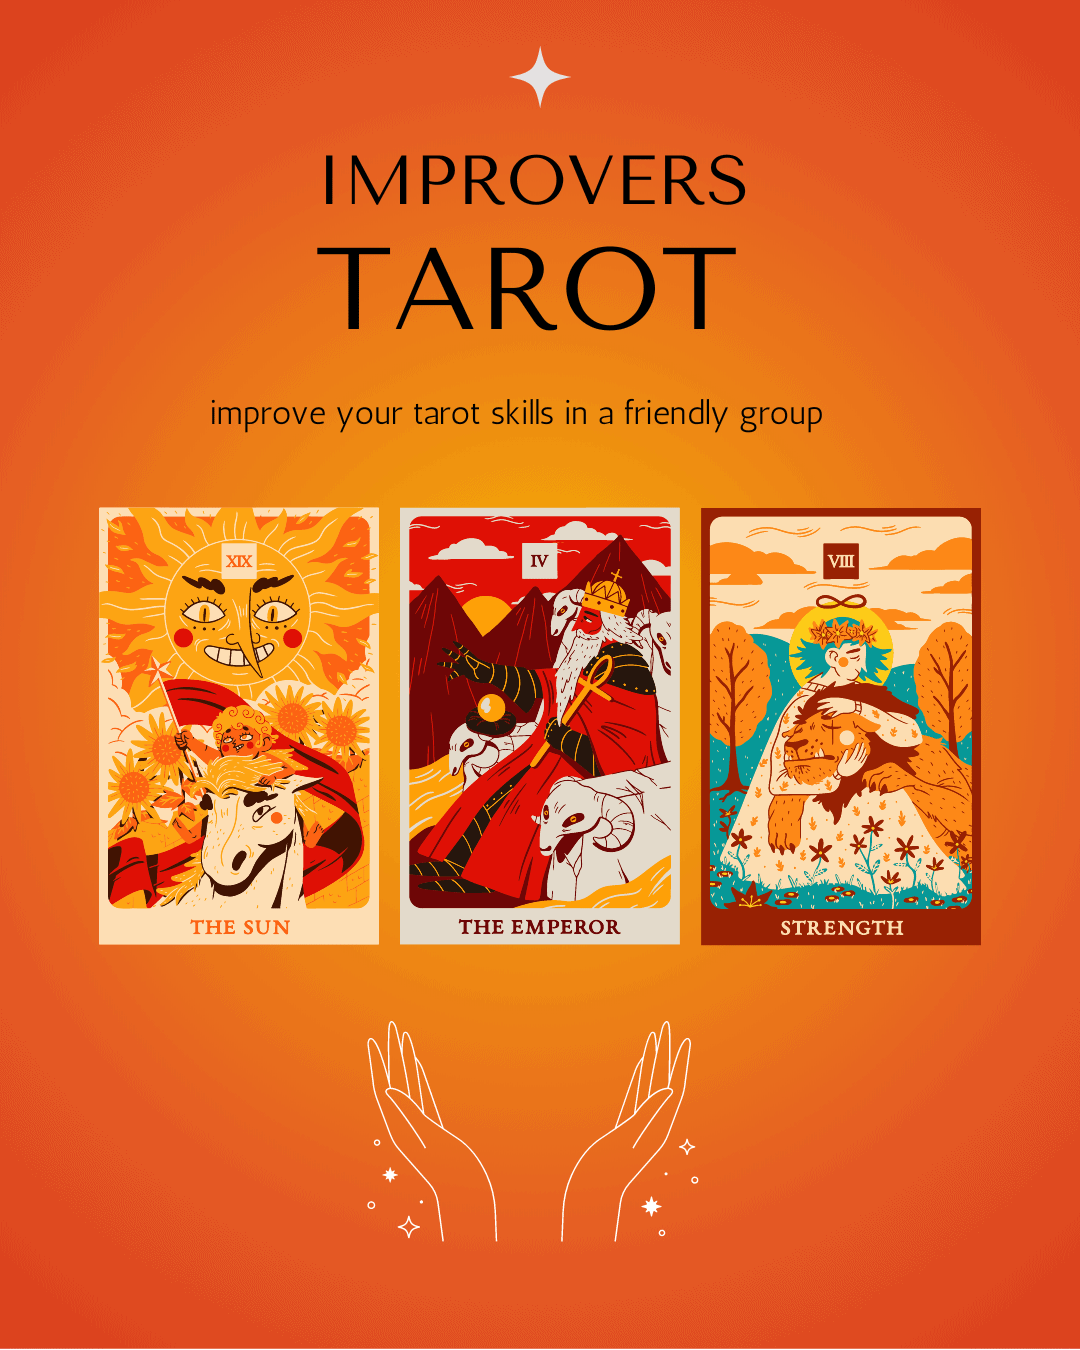 learn tarot improvers